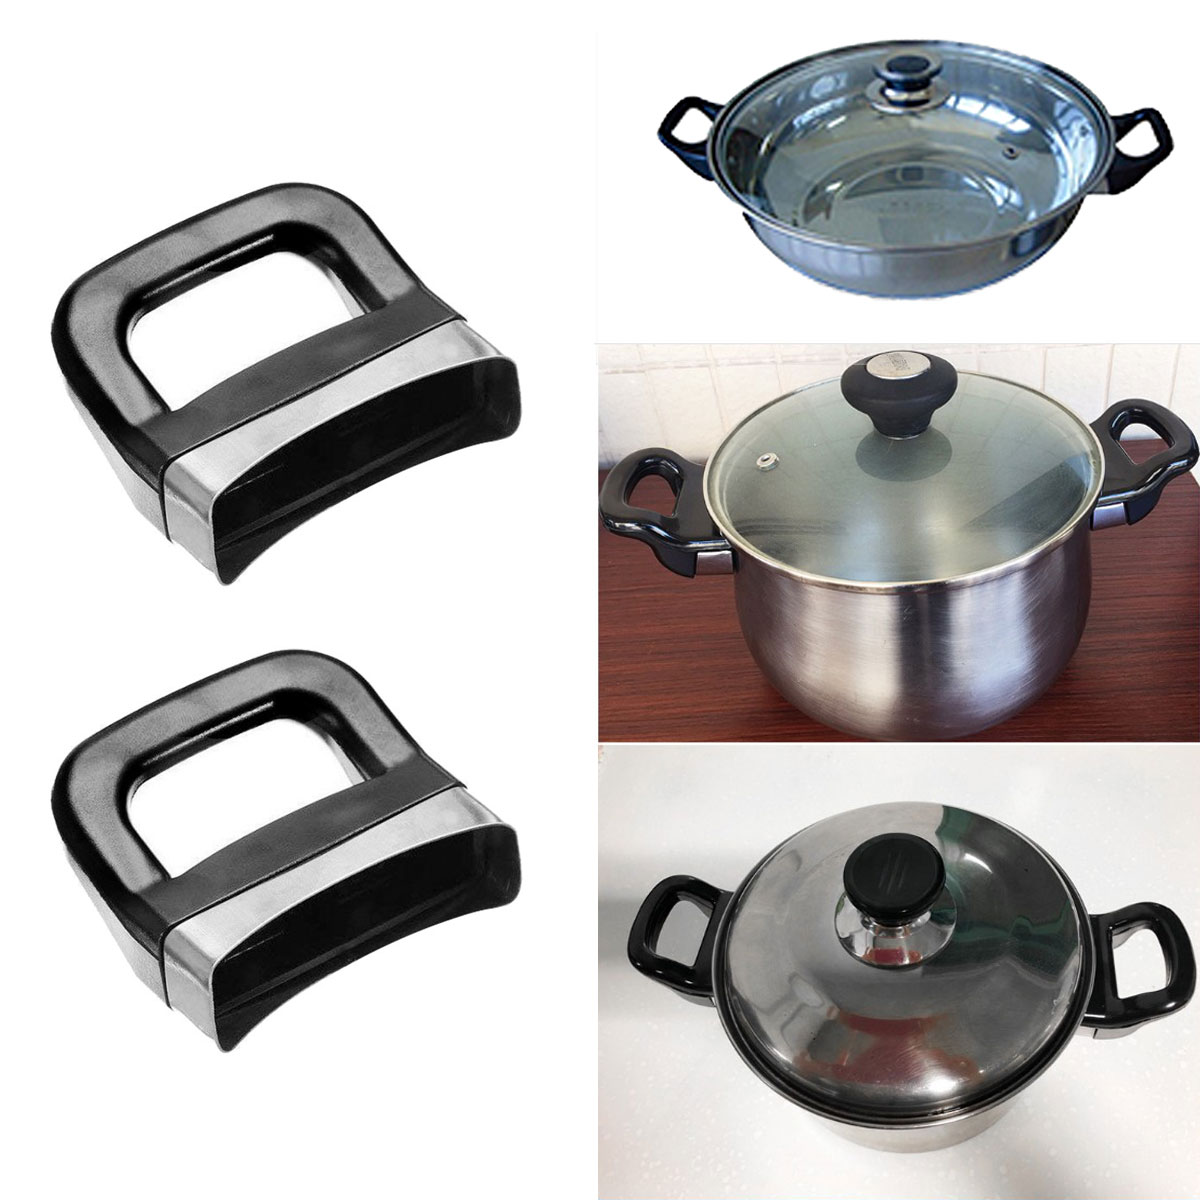 https://alitools.io/en/showcase/image?url=https%3A%2F%2Fae01.alicdn.com%2Fkf%2FHTB1ECYGd8iE3KVjSZFMq6zQhVXas%2F2Pcs-Cooking-Pot-Handles-for-Pans-Pressure-Cooker-Steamer-Bakelite-Pot-Ear-Replacement-Potty-Side-Handle.jpg